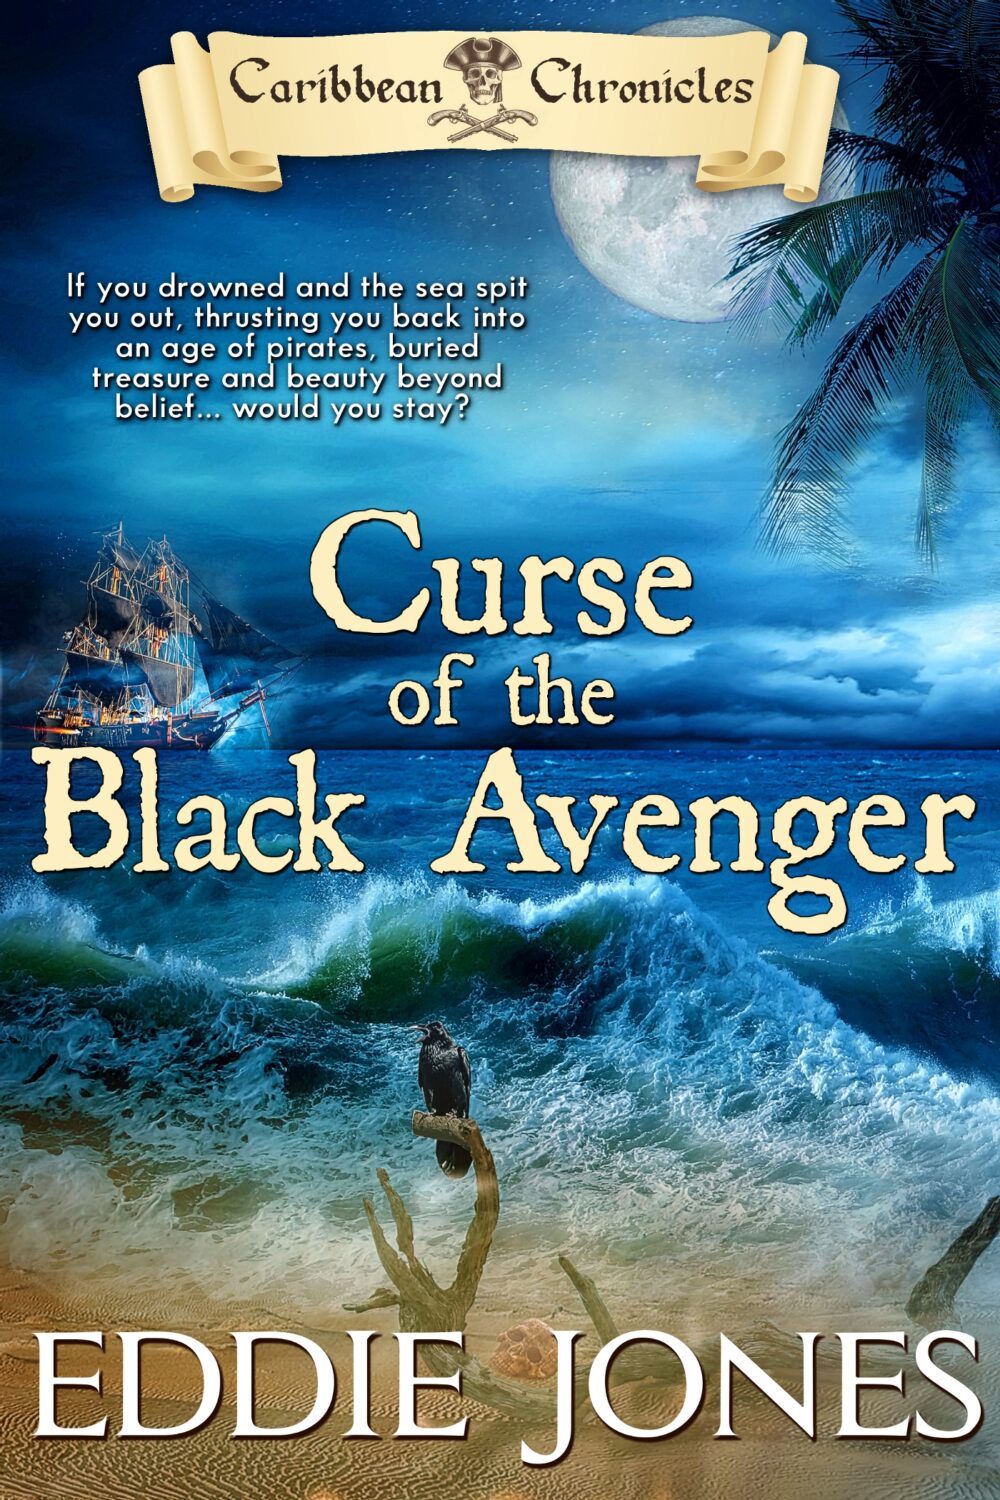 Pirates! — Curse of the Black Avenger by Eddie Jones